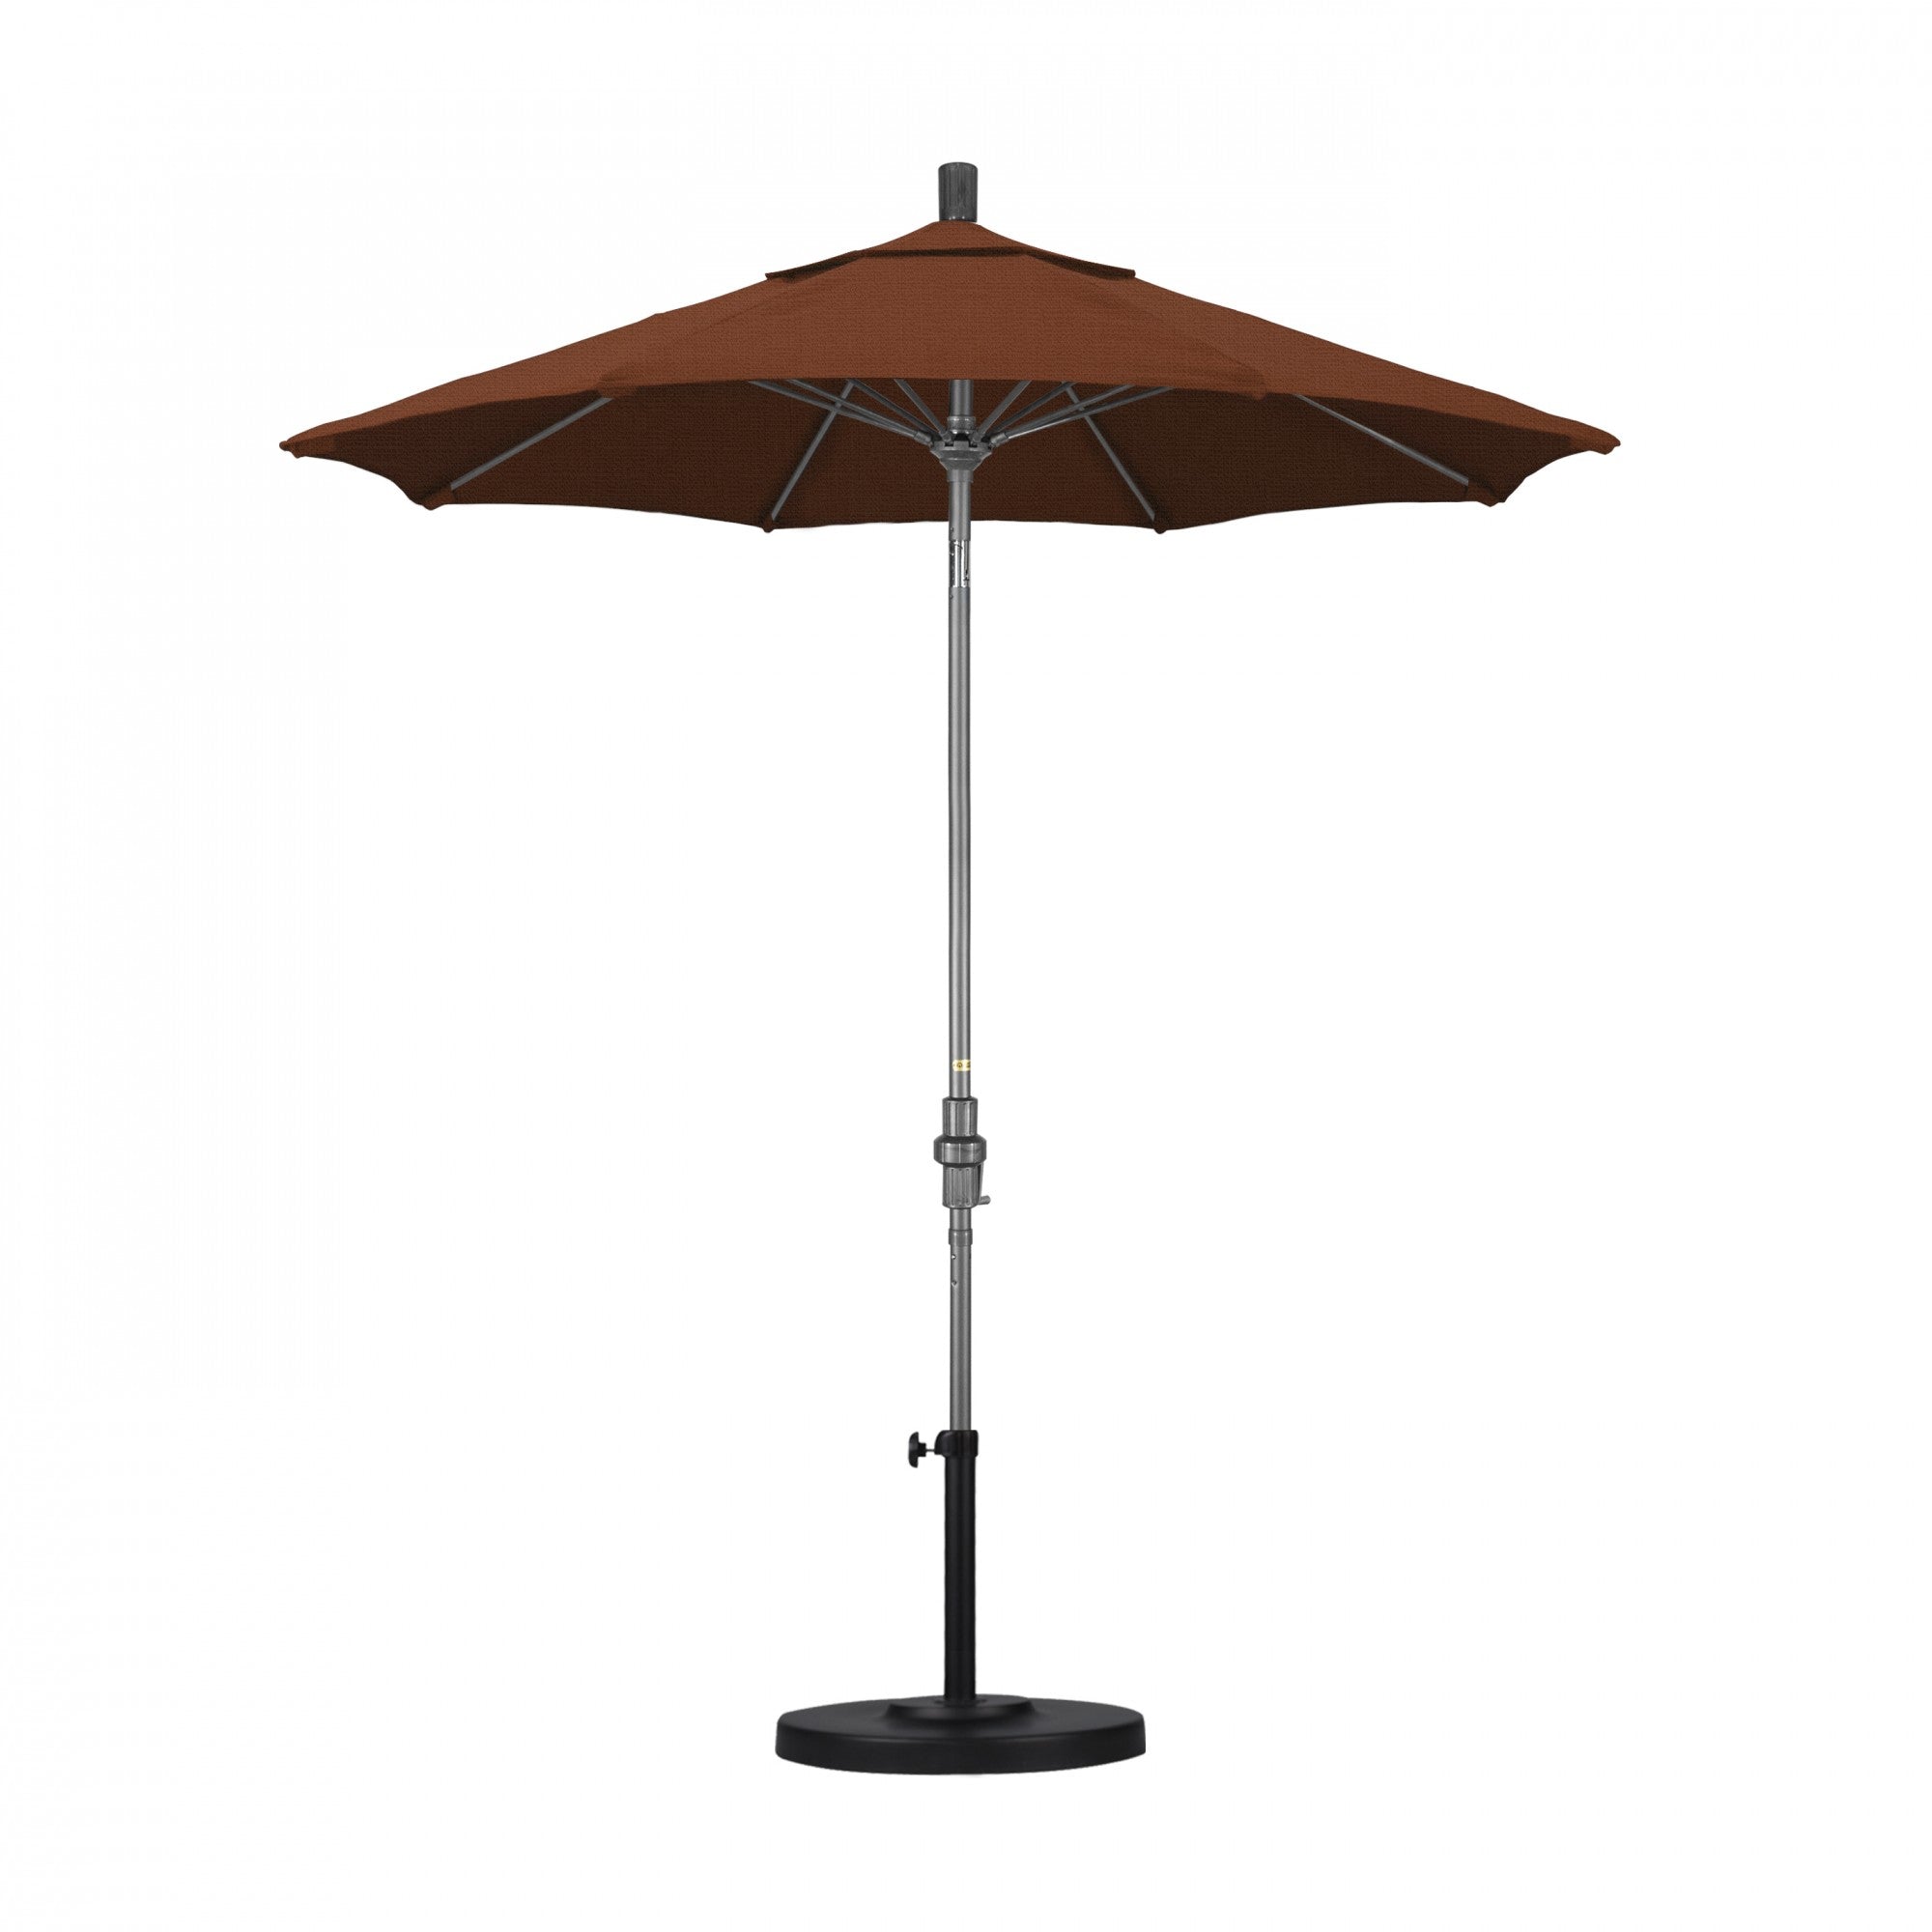 California Umbrella - 7.5' - Patio Umbrella Umbrella - Aluminum Pole - Terracotta - Olefin - GSCUF758010-F69